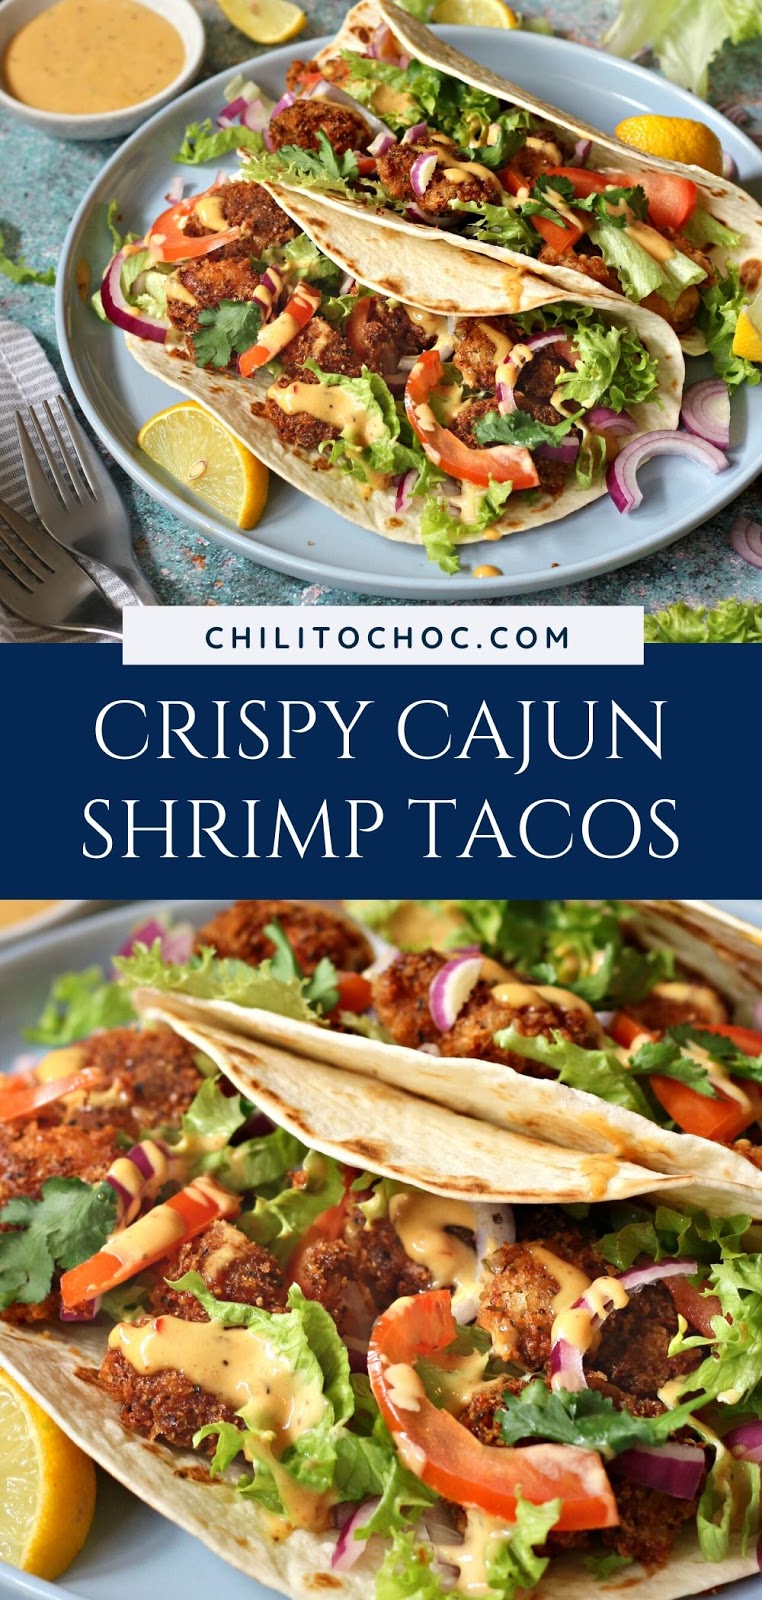 Crispy Cajun Shrimp Tacos | Chili to Choc